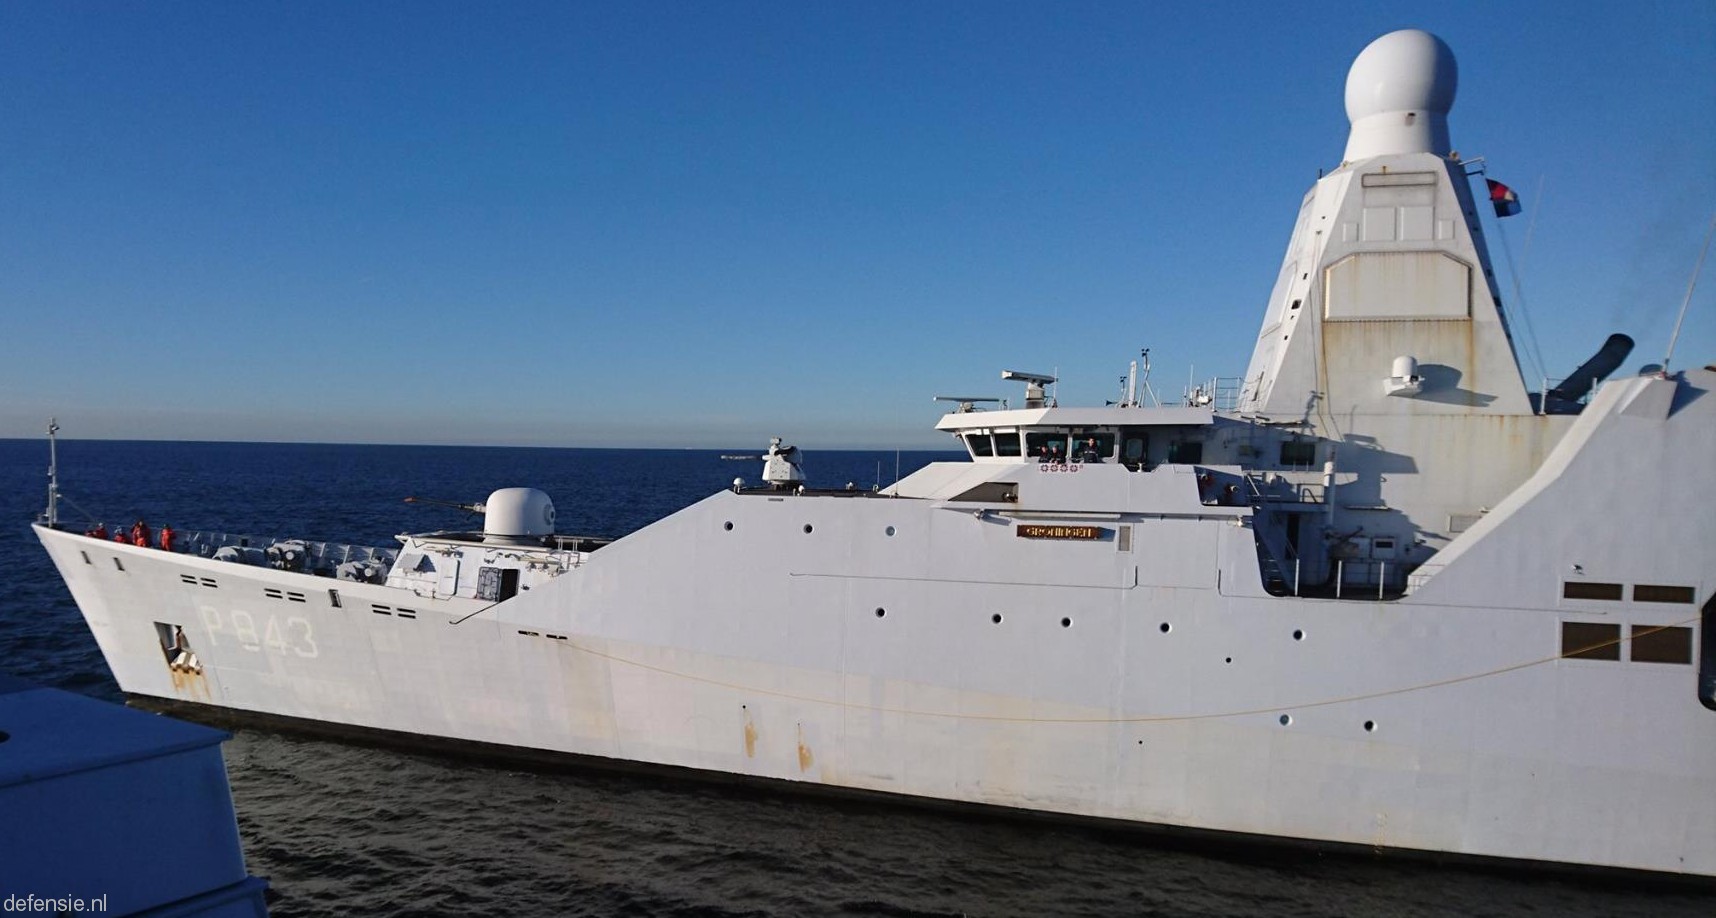 p-843 hnlms groningen holland class offshore patrol vessel opv royal netherlands navy 12 koninklijke marine